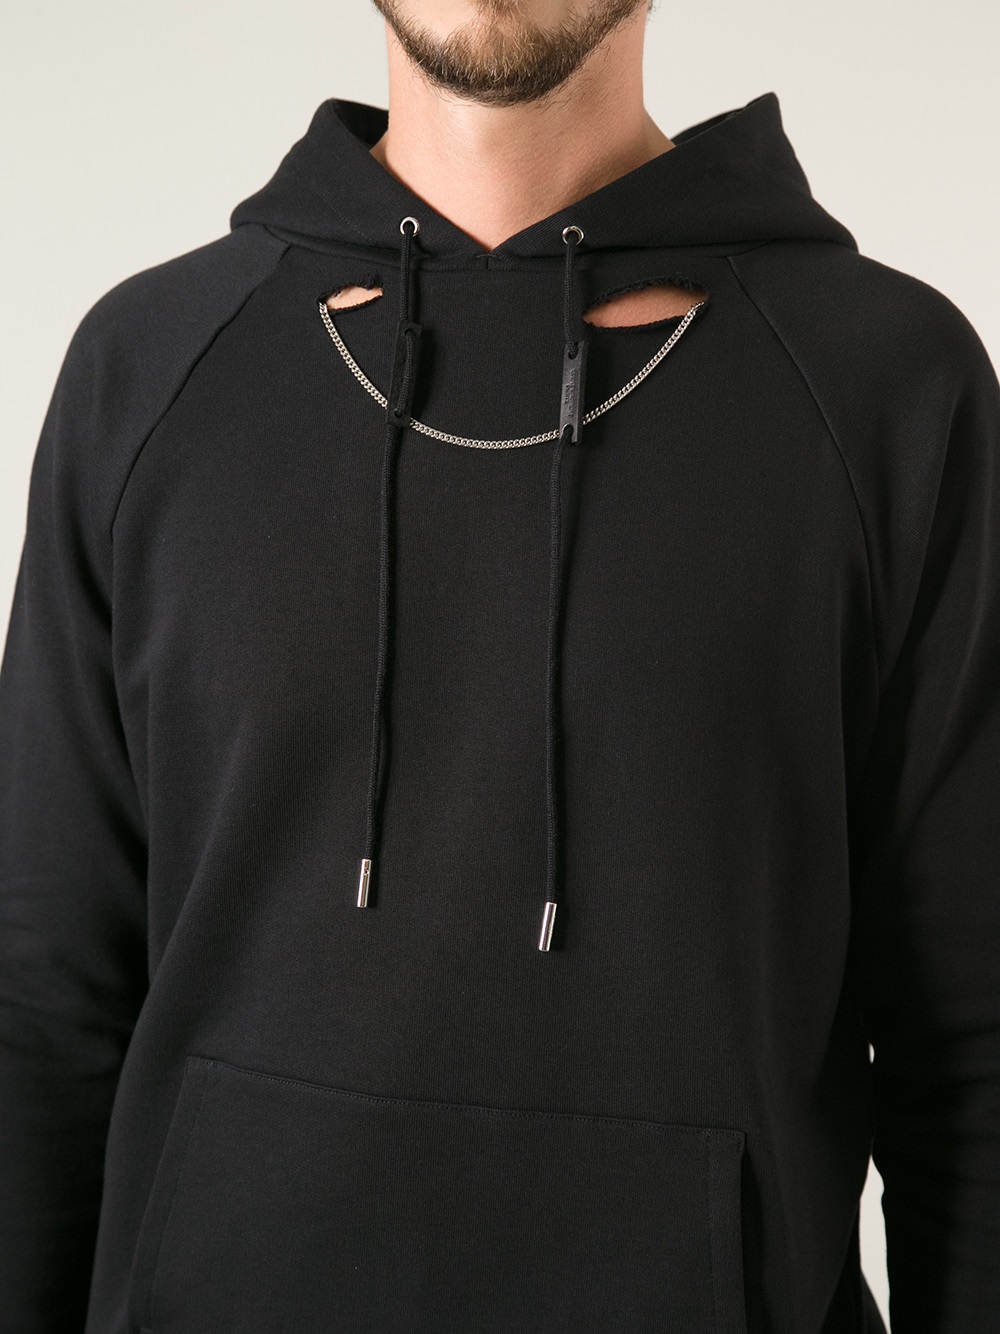 saint laurent logo hoodie sale